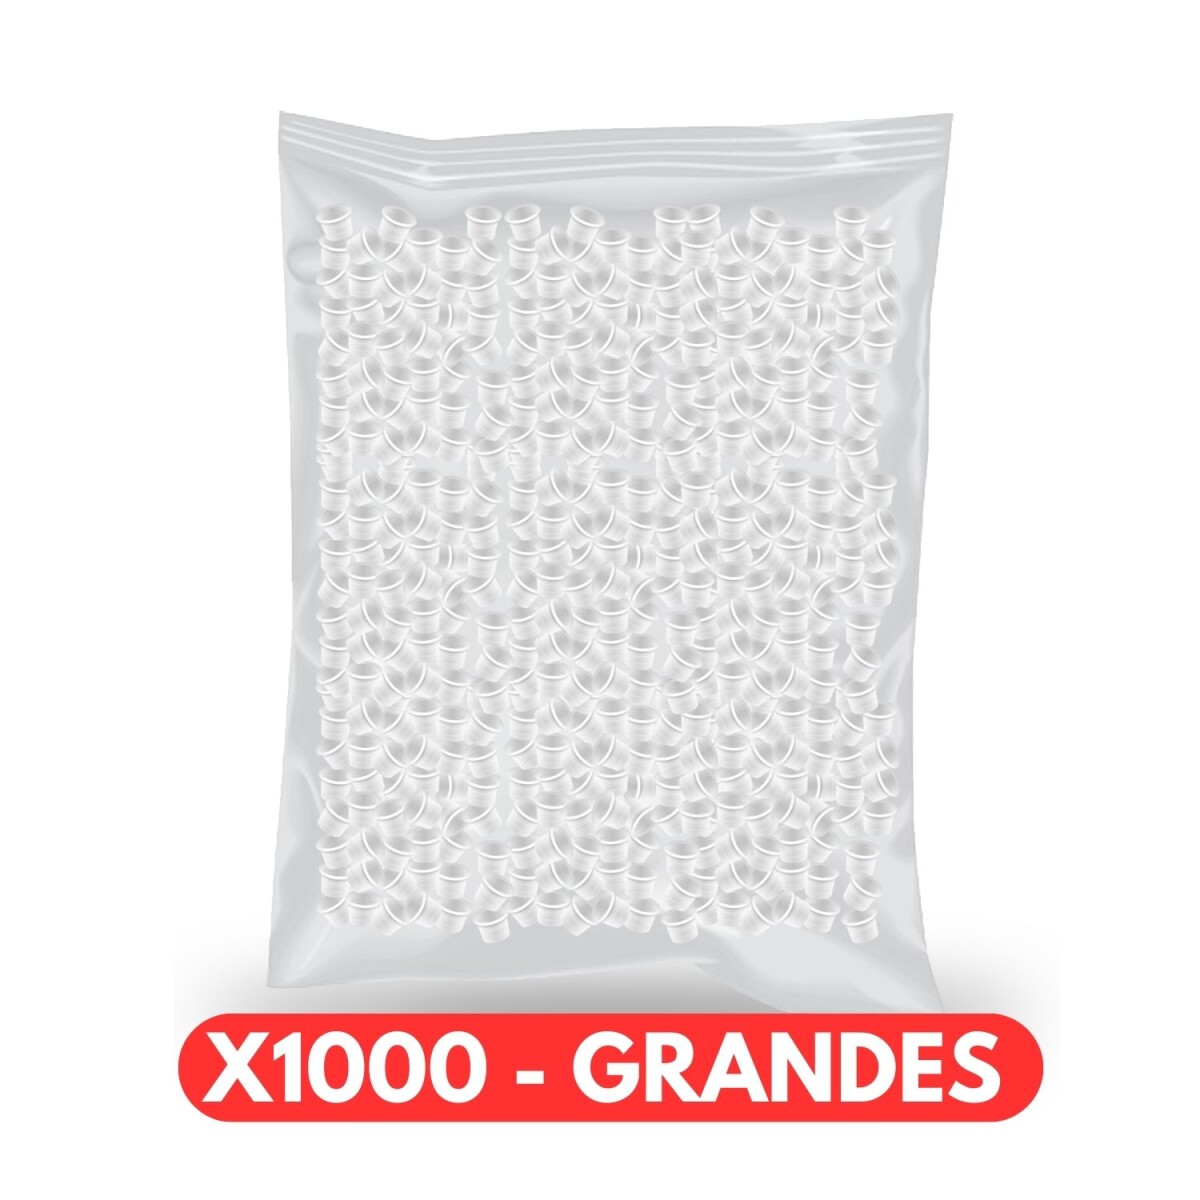 TETINES GRANDES BOLSA x 1000 